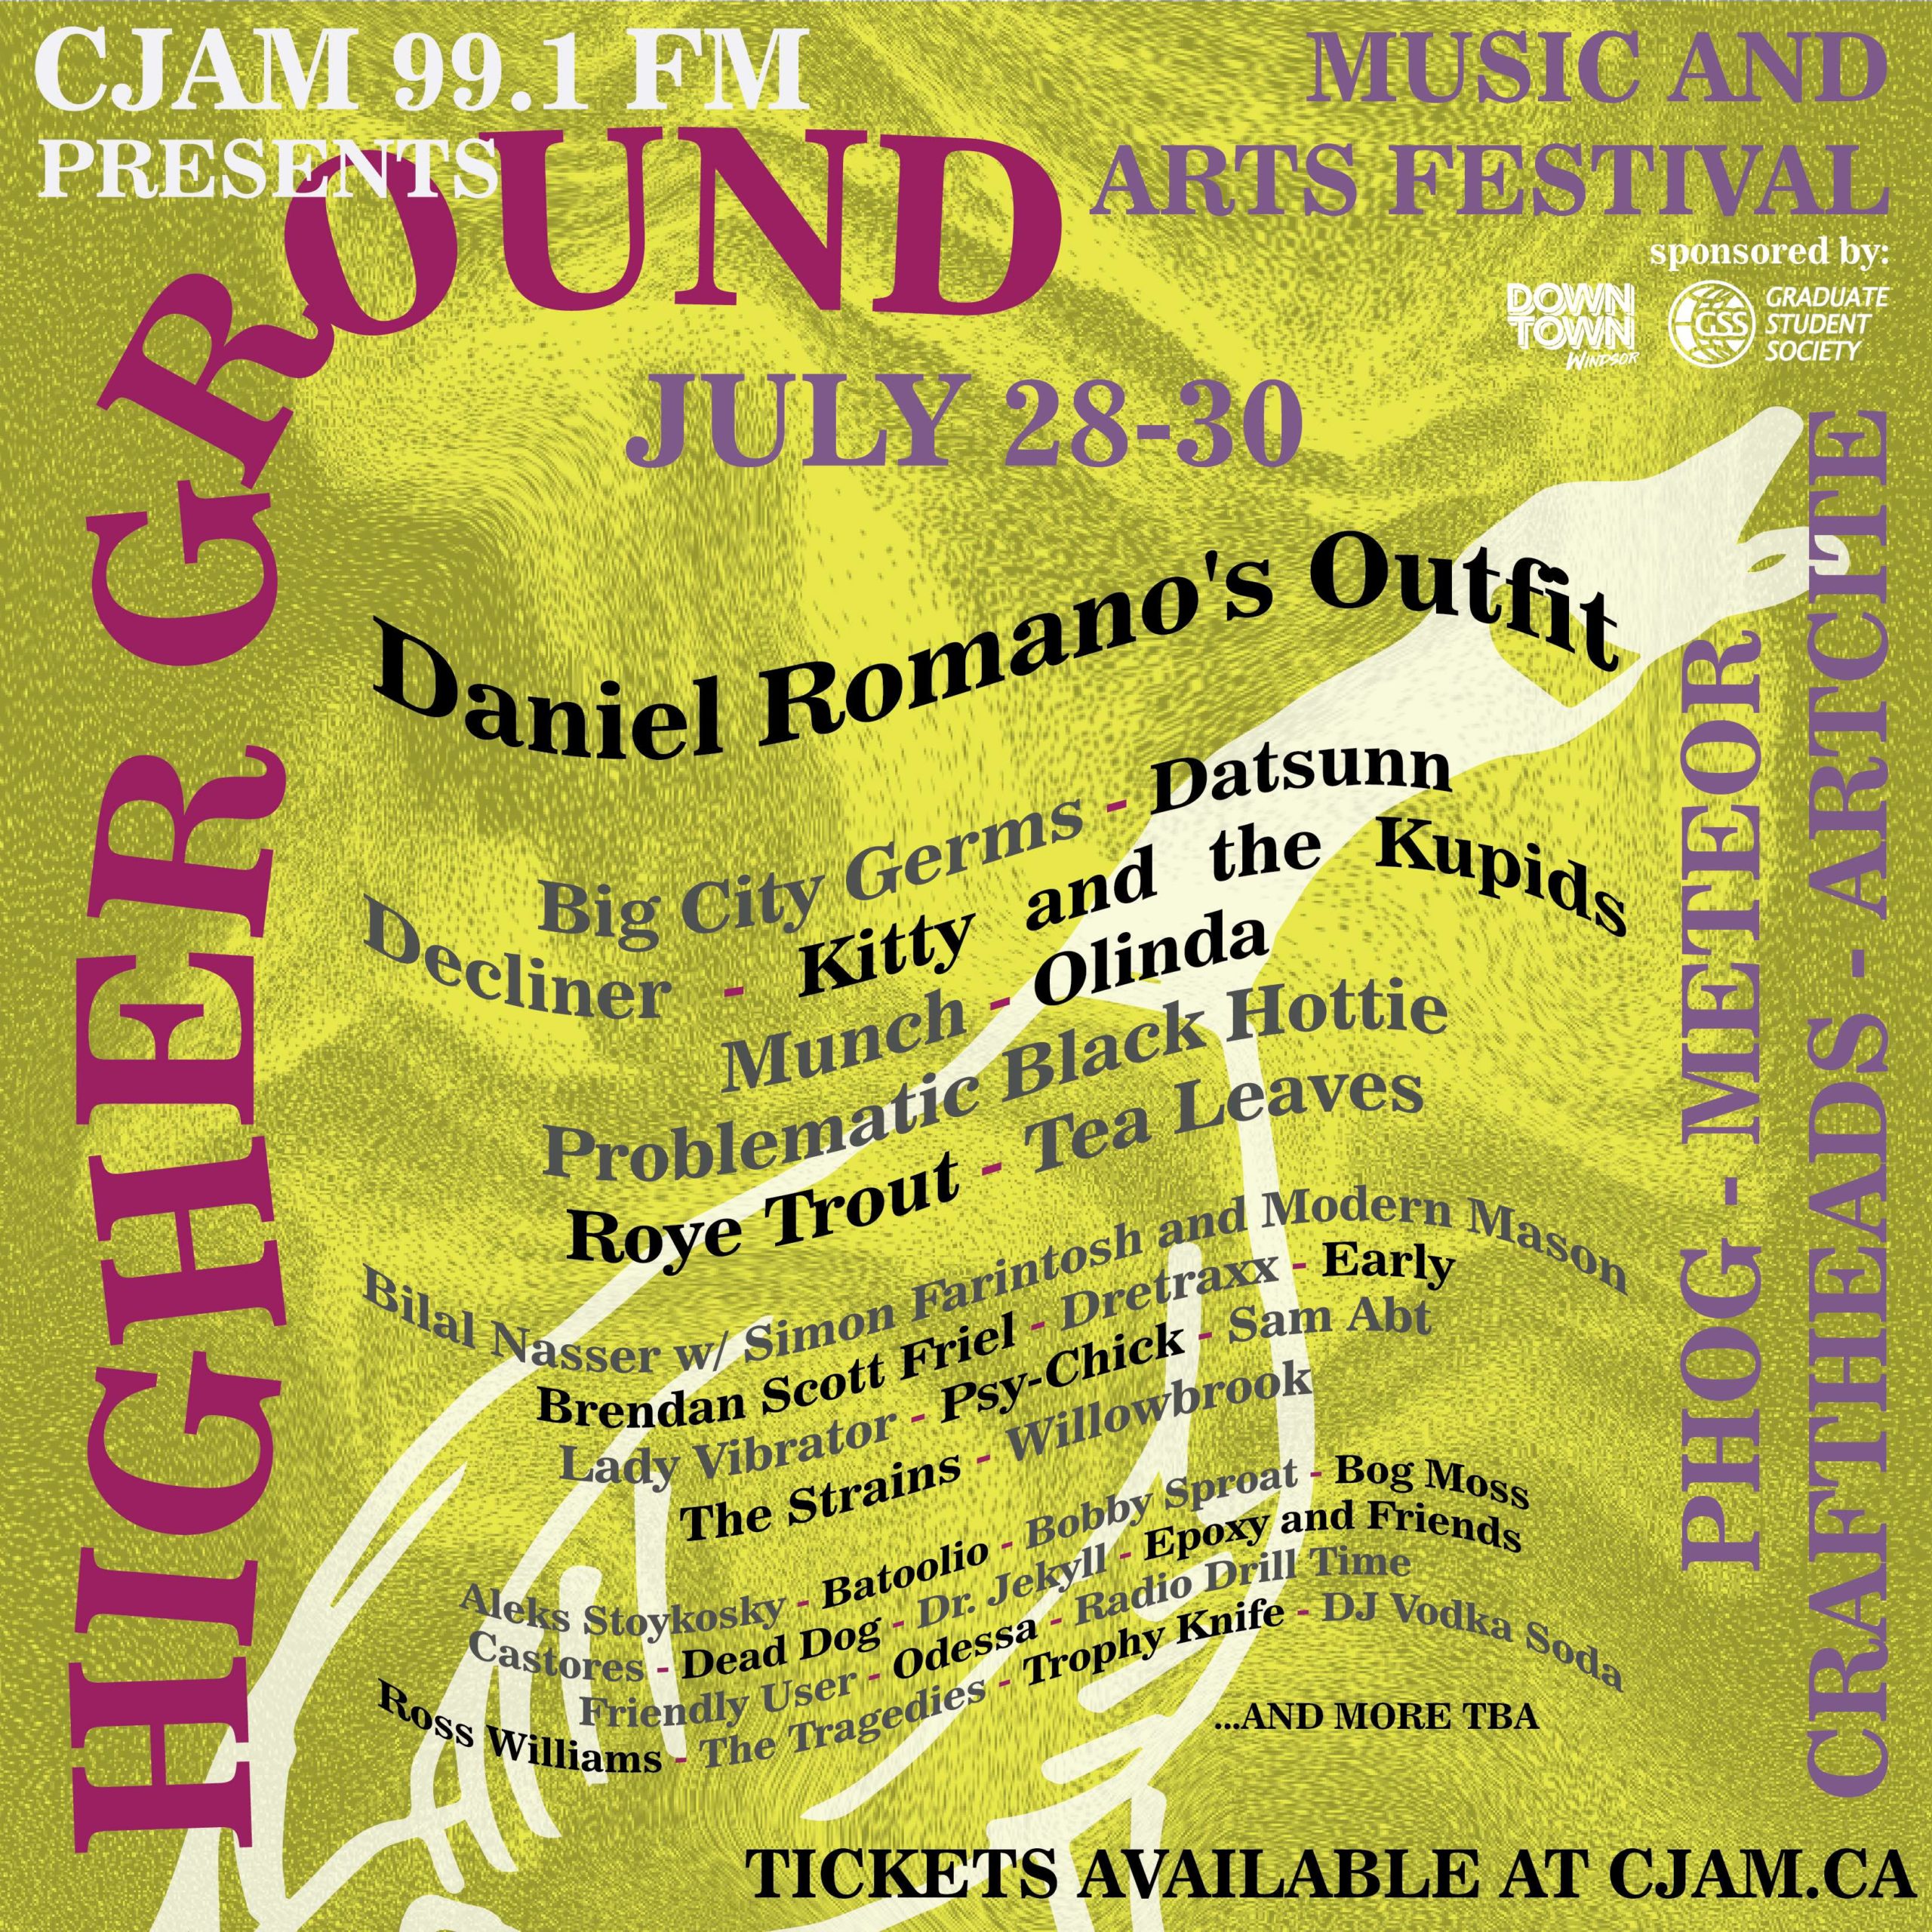 CJAM's Higher Ground Music and Arts Festival